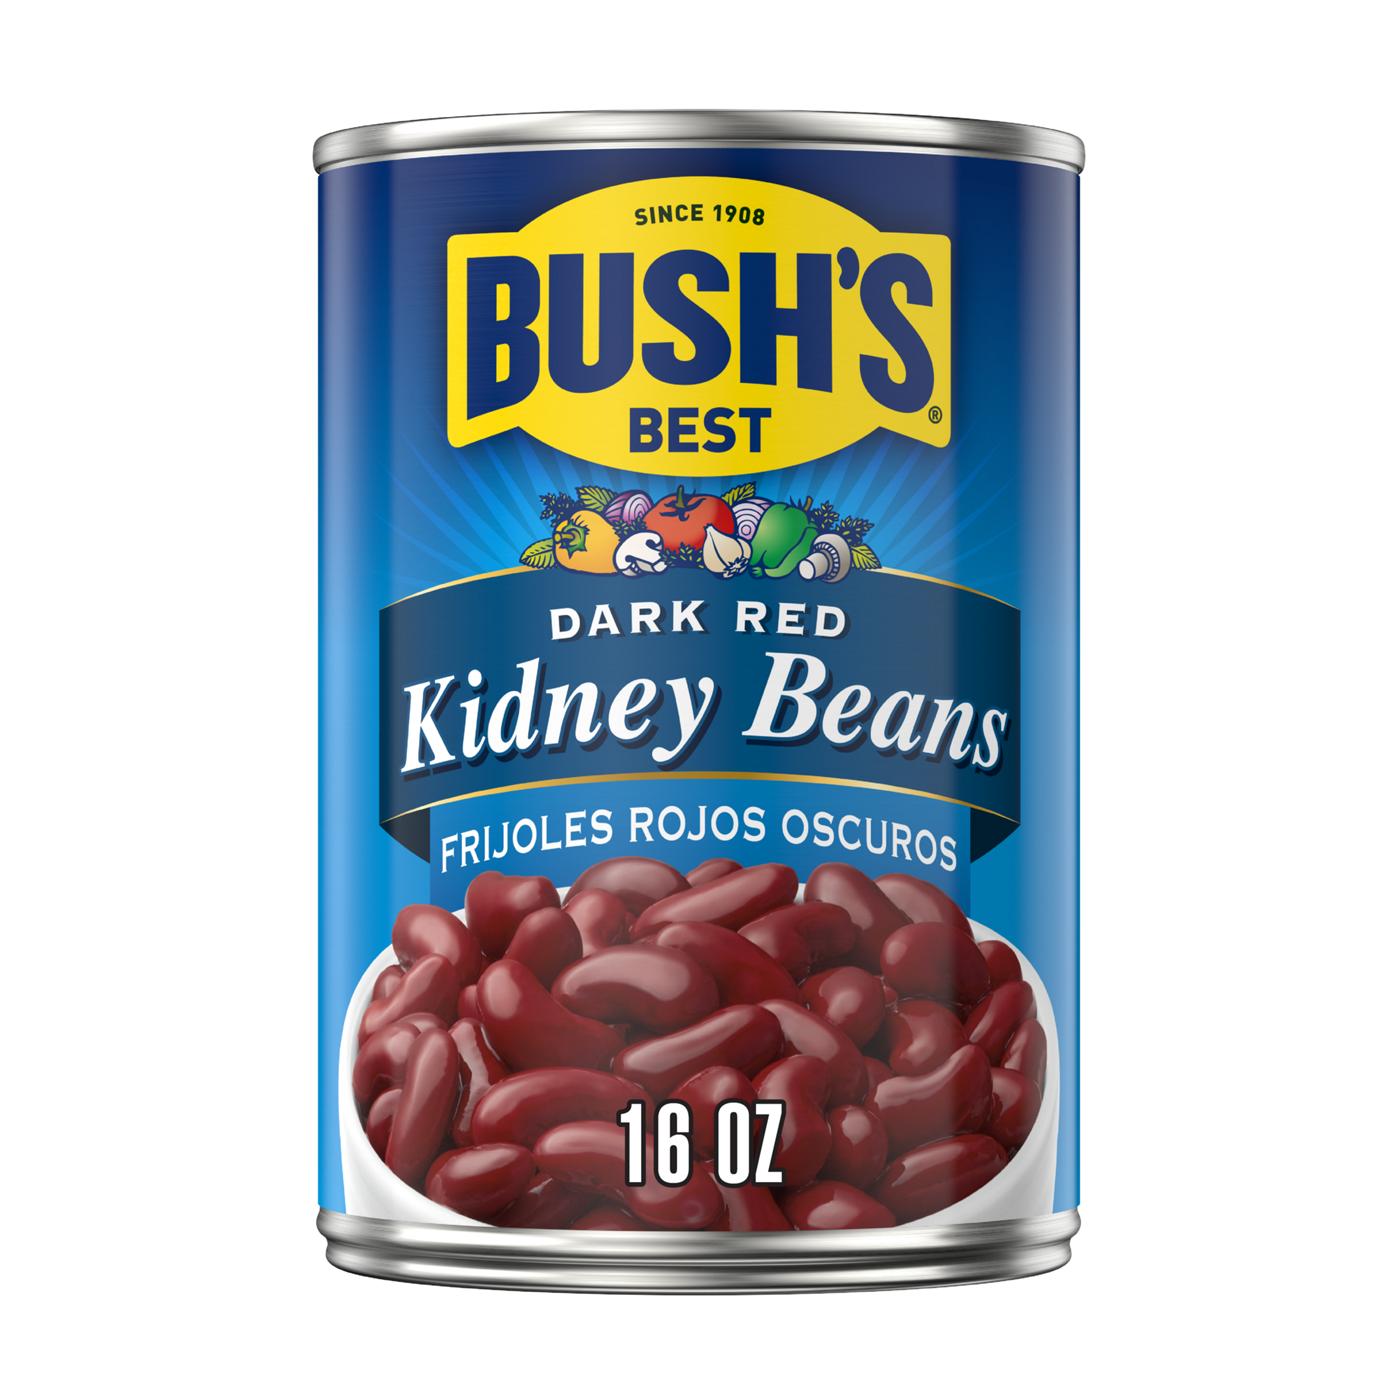 Bush's Best Dark Red Kidney Beans; image 1 of 4